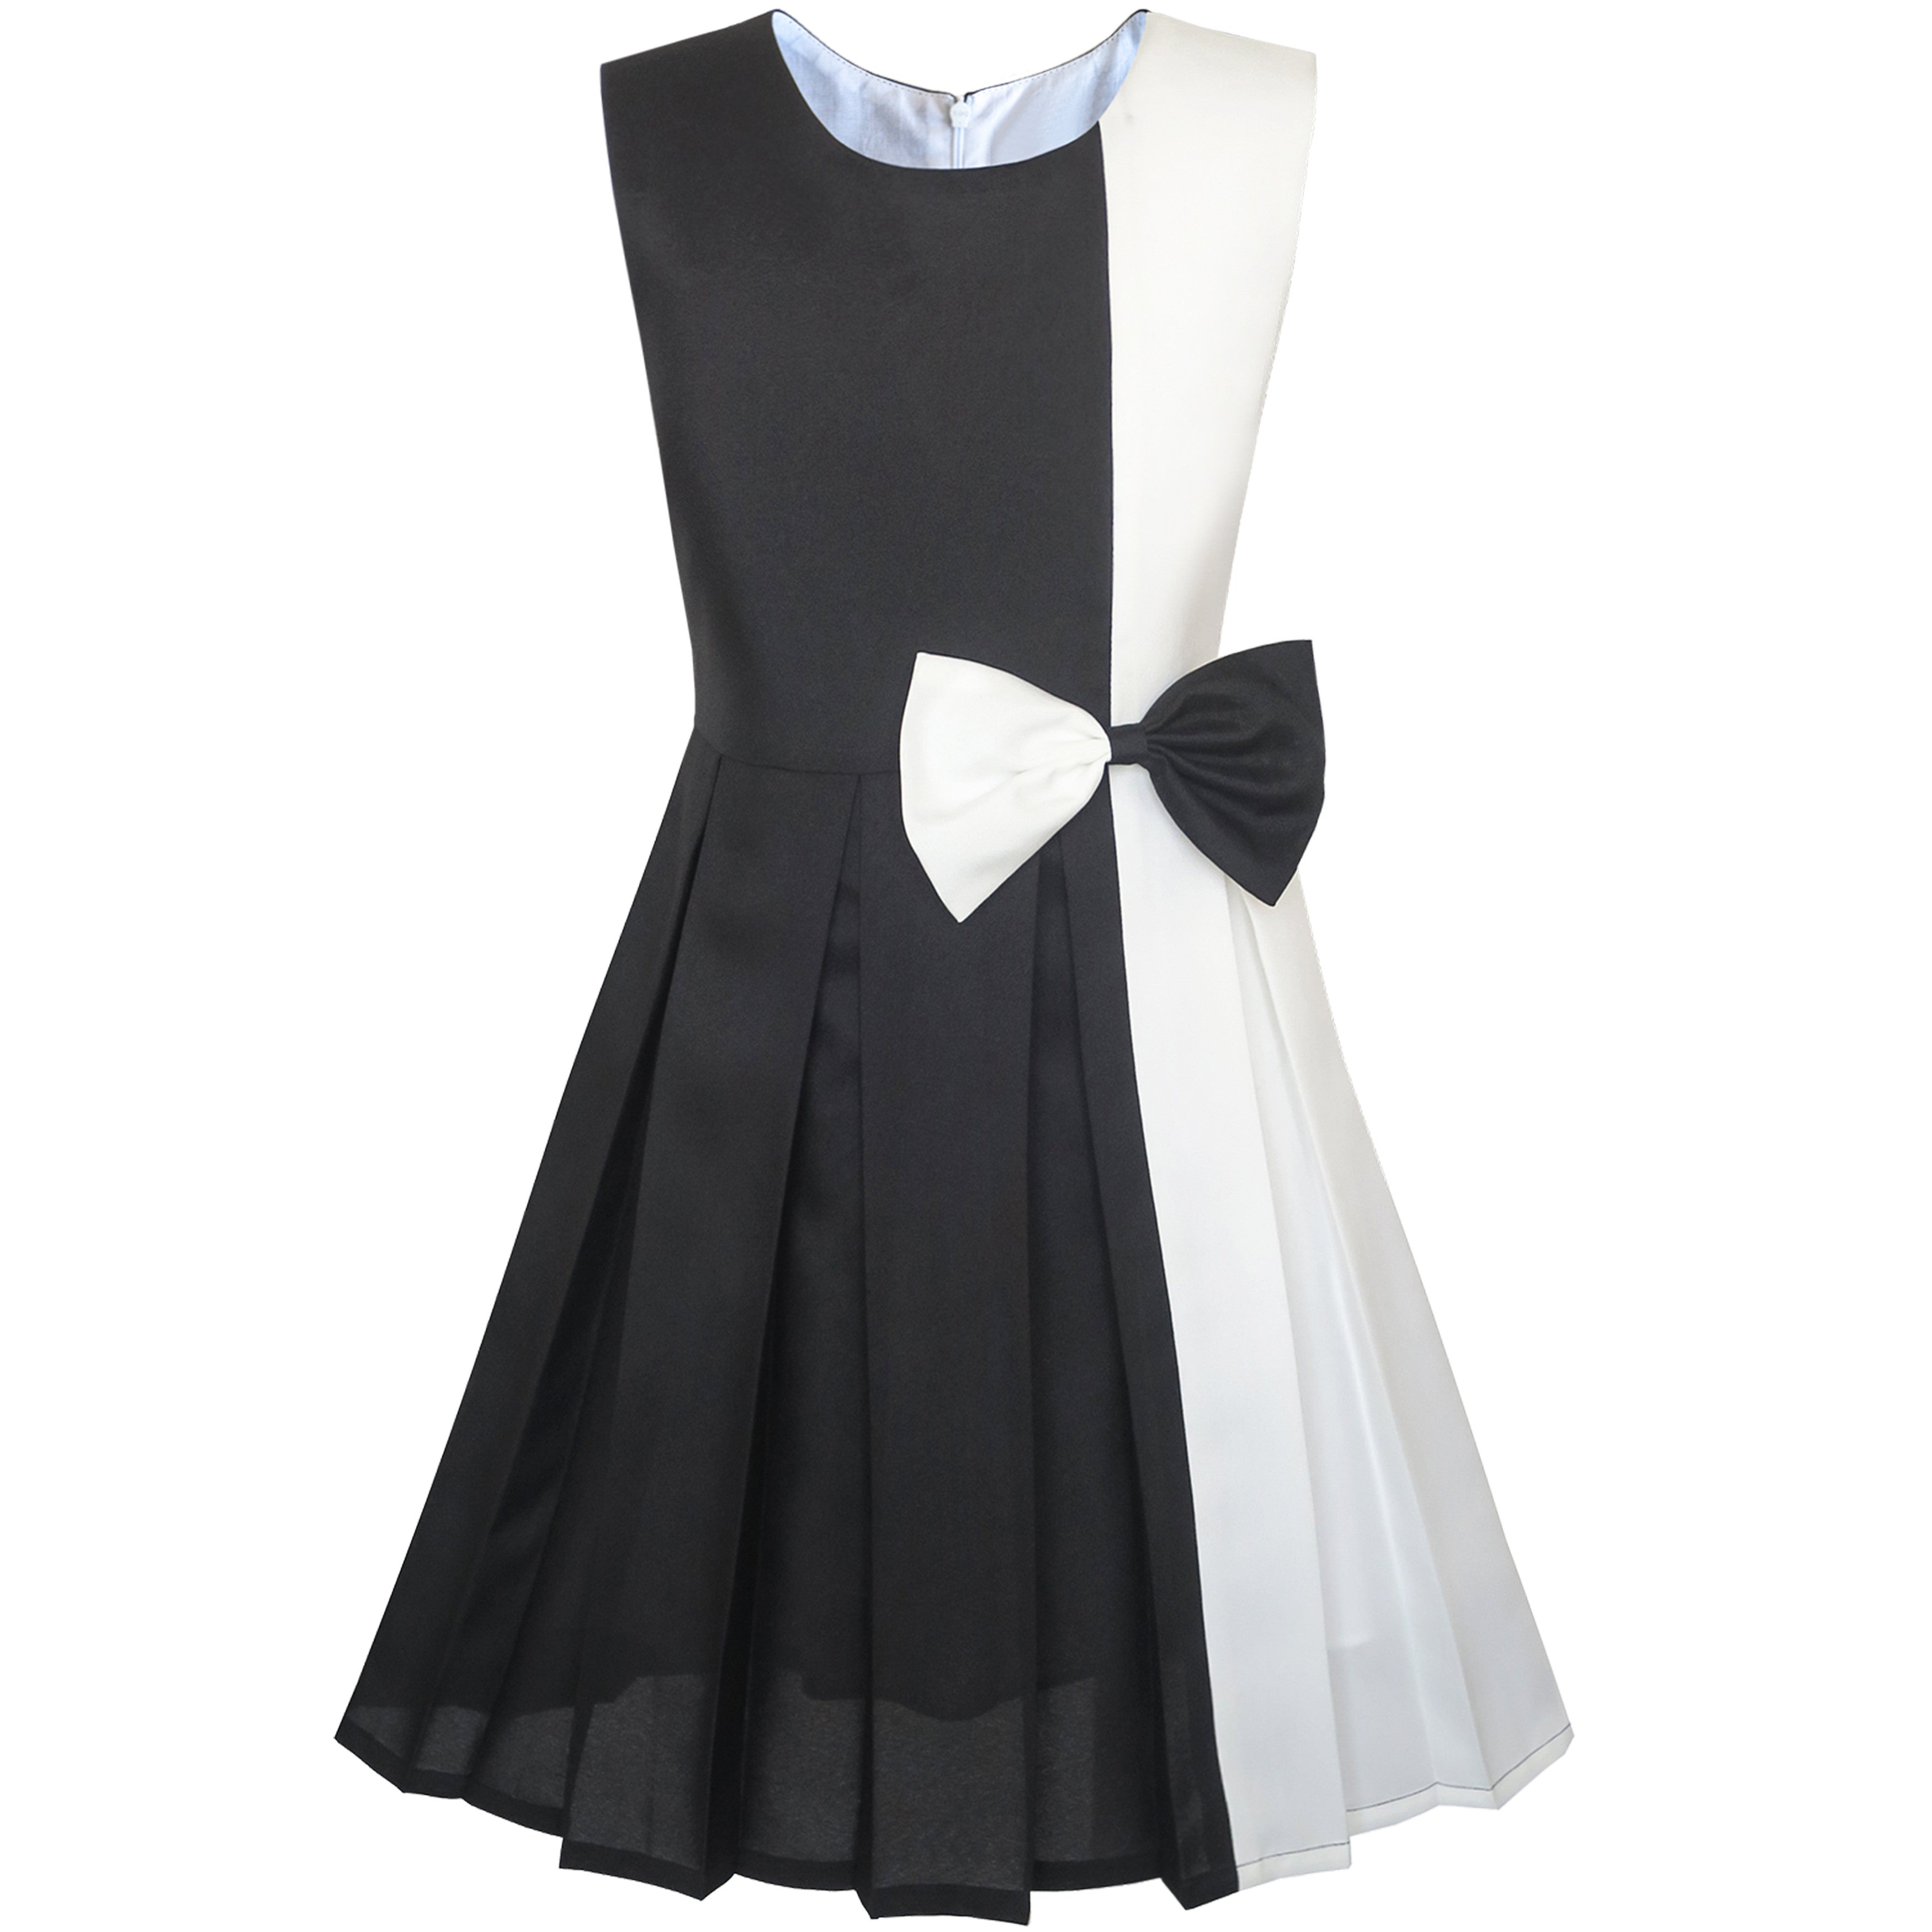 black and white dress for girl